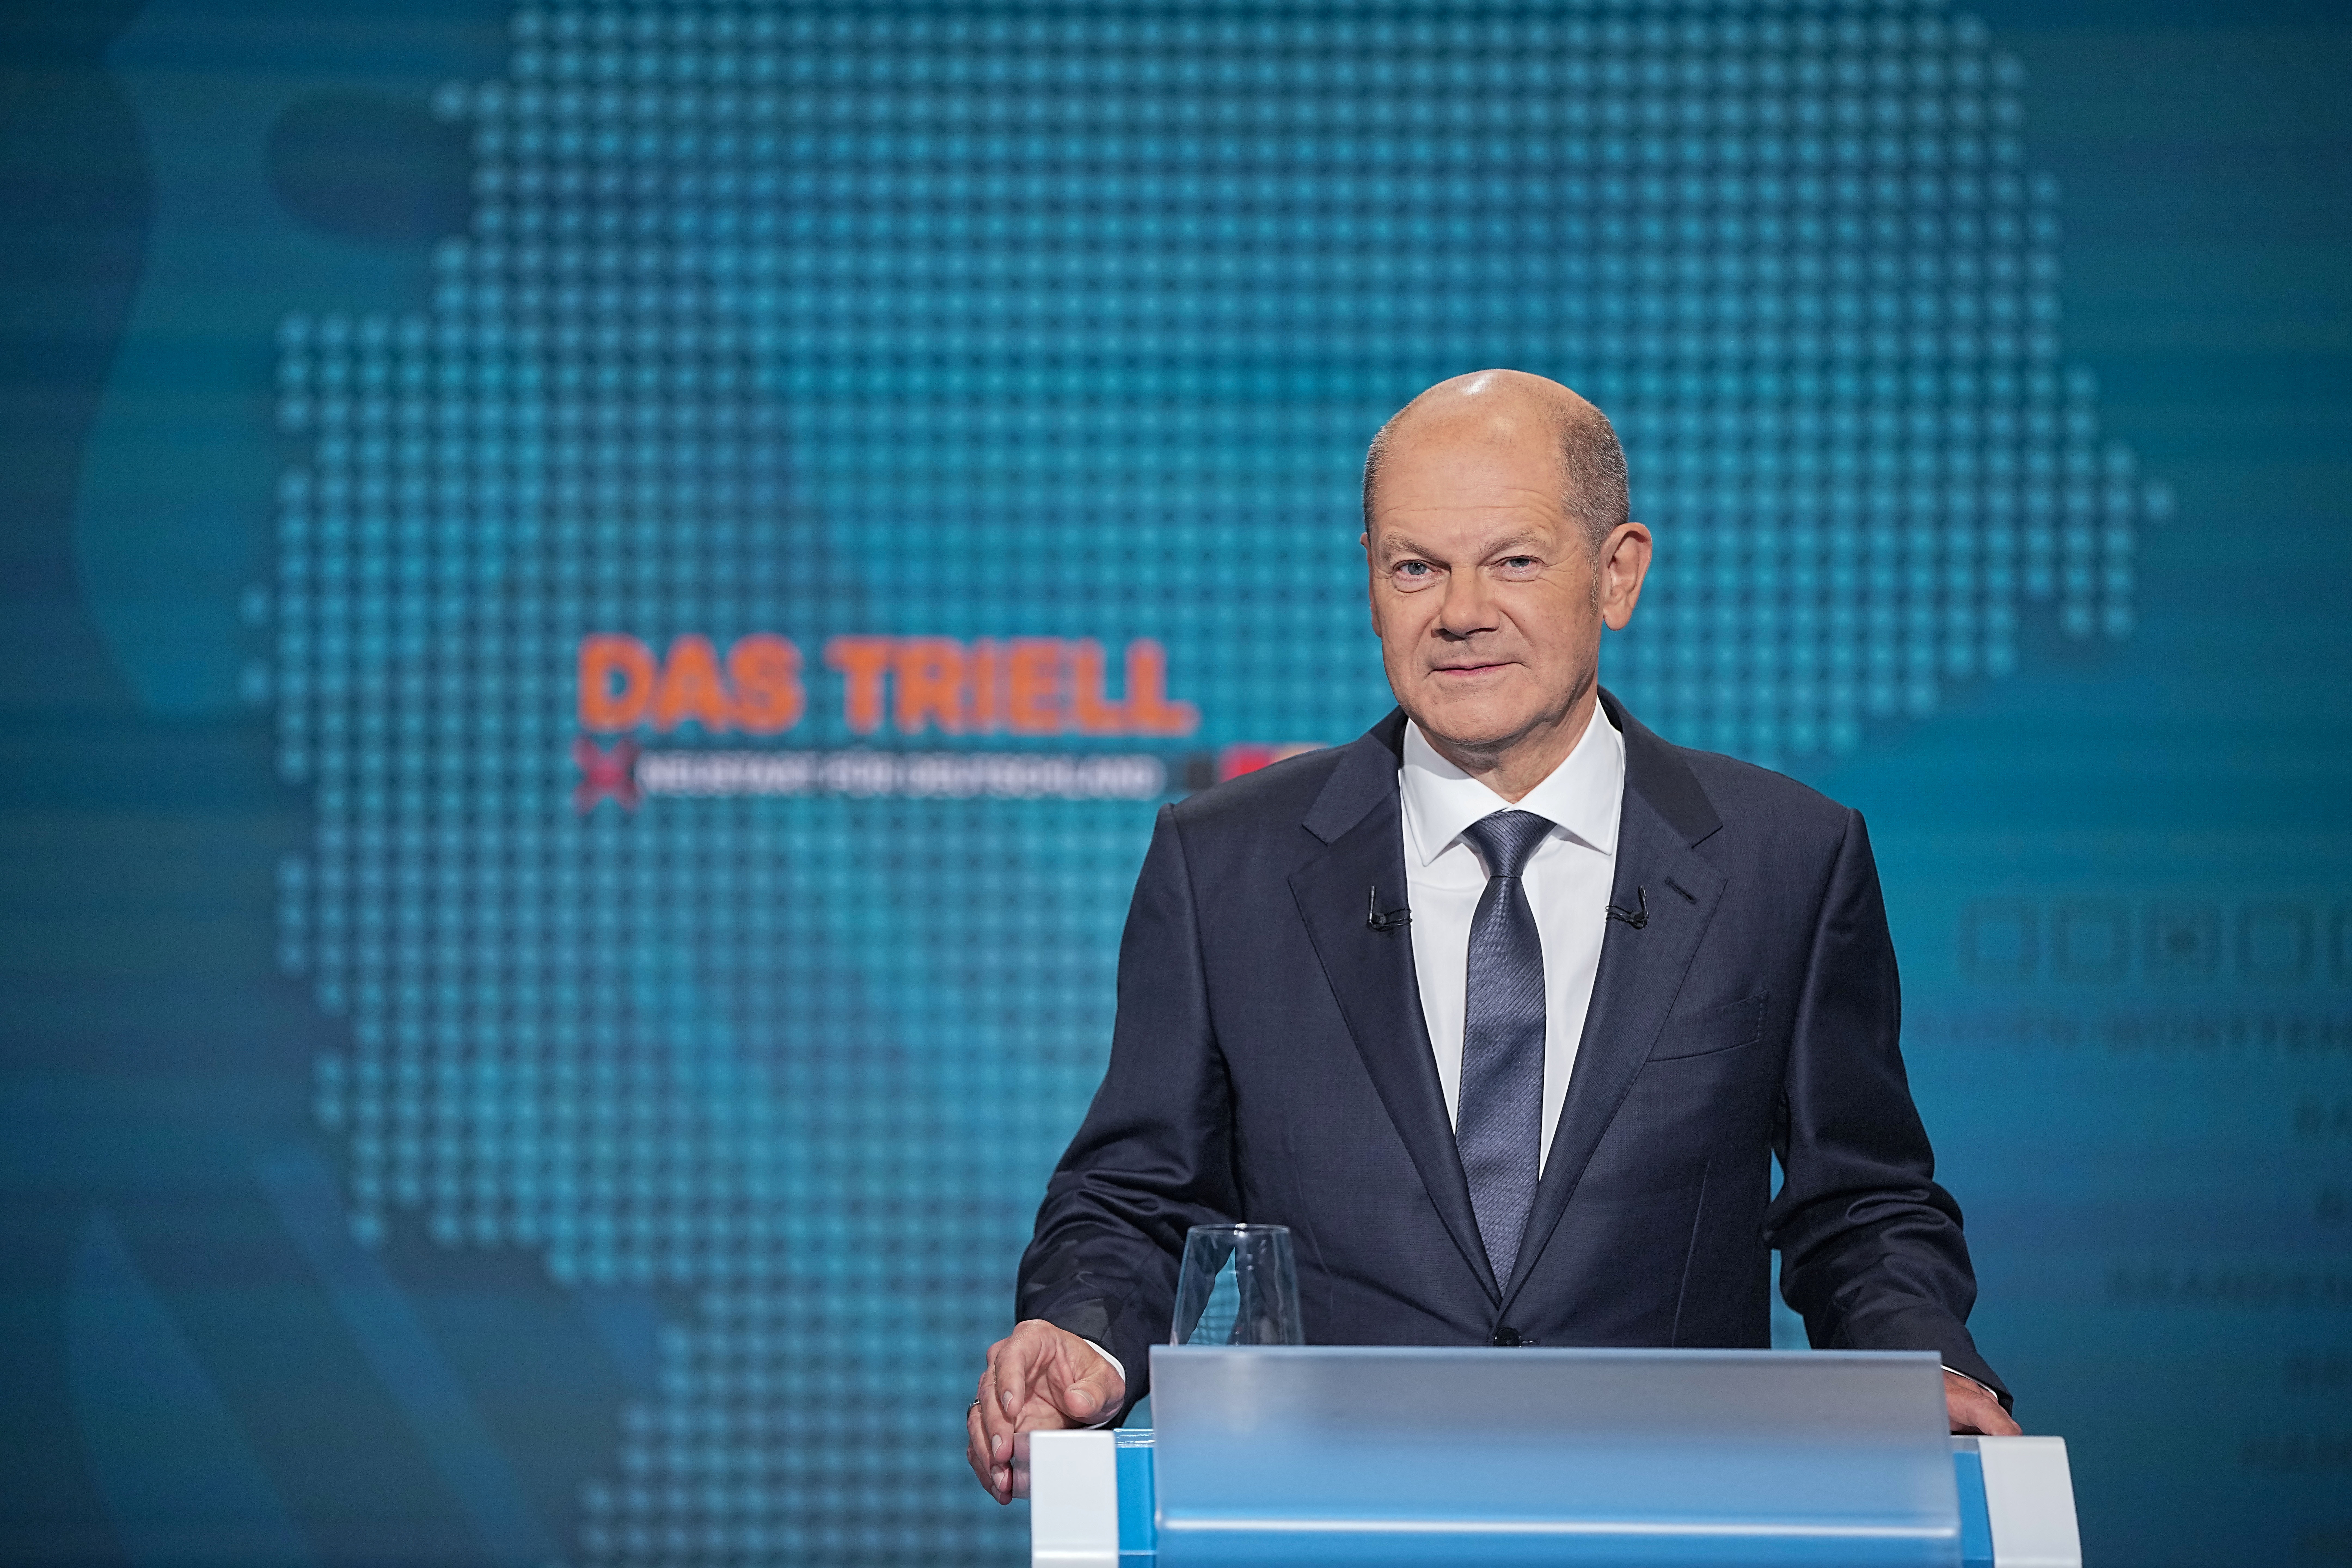 Televised debate of the candidates to succeed Germany's Merkel